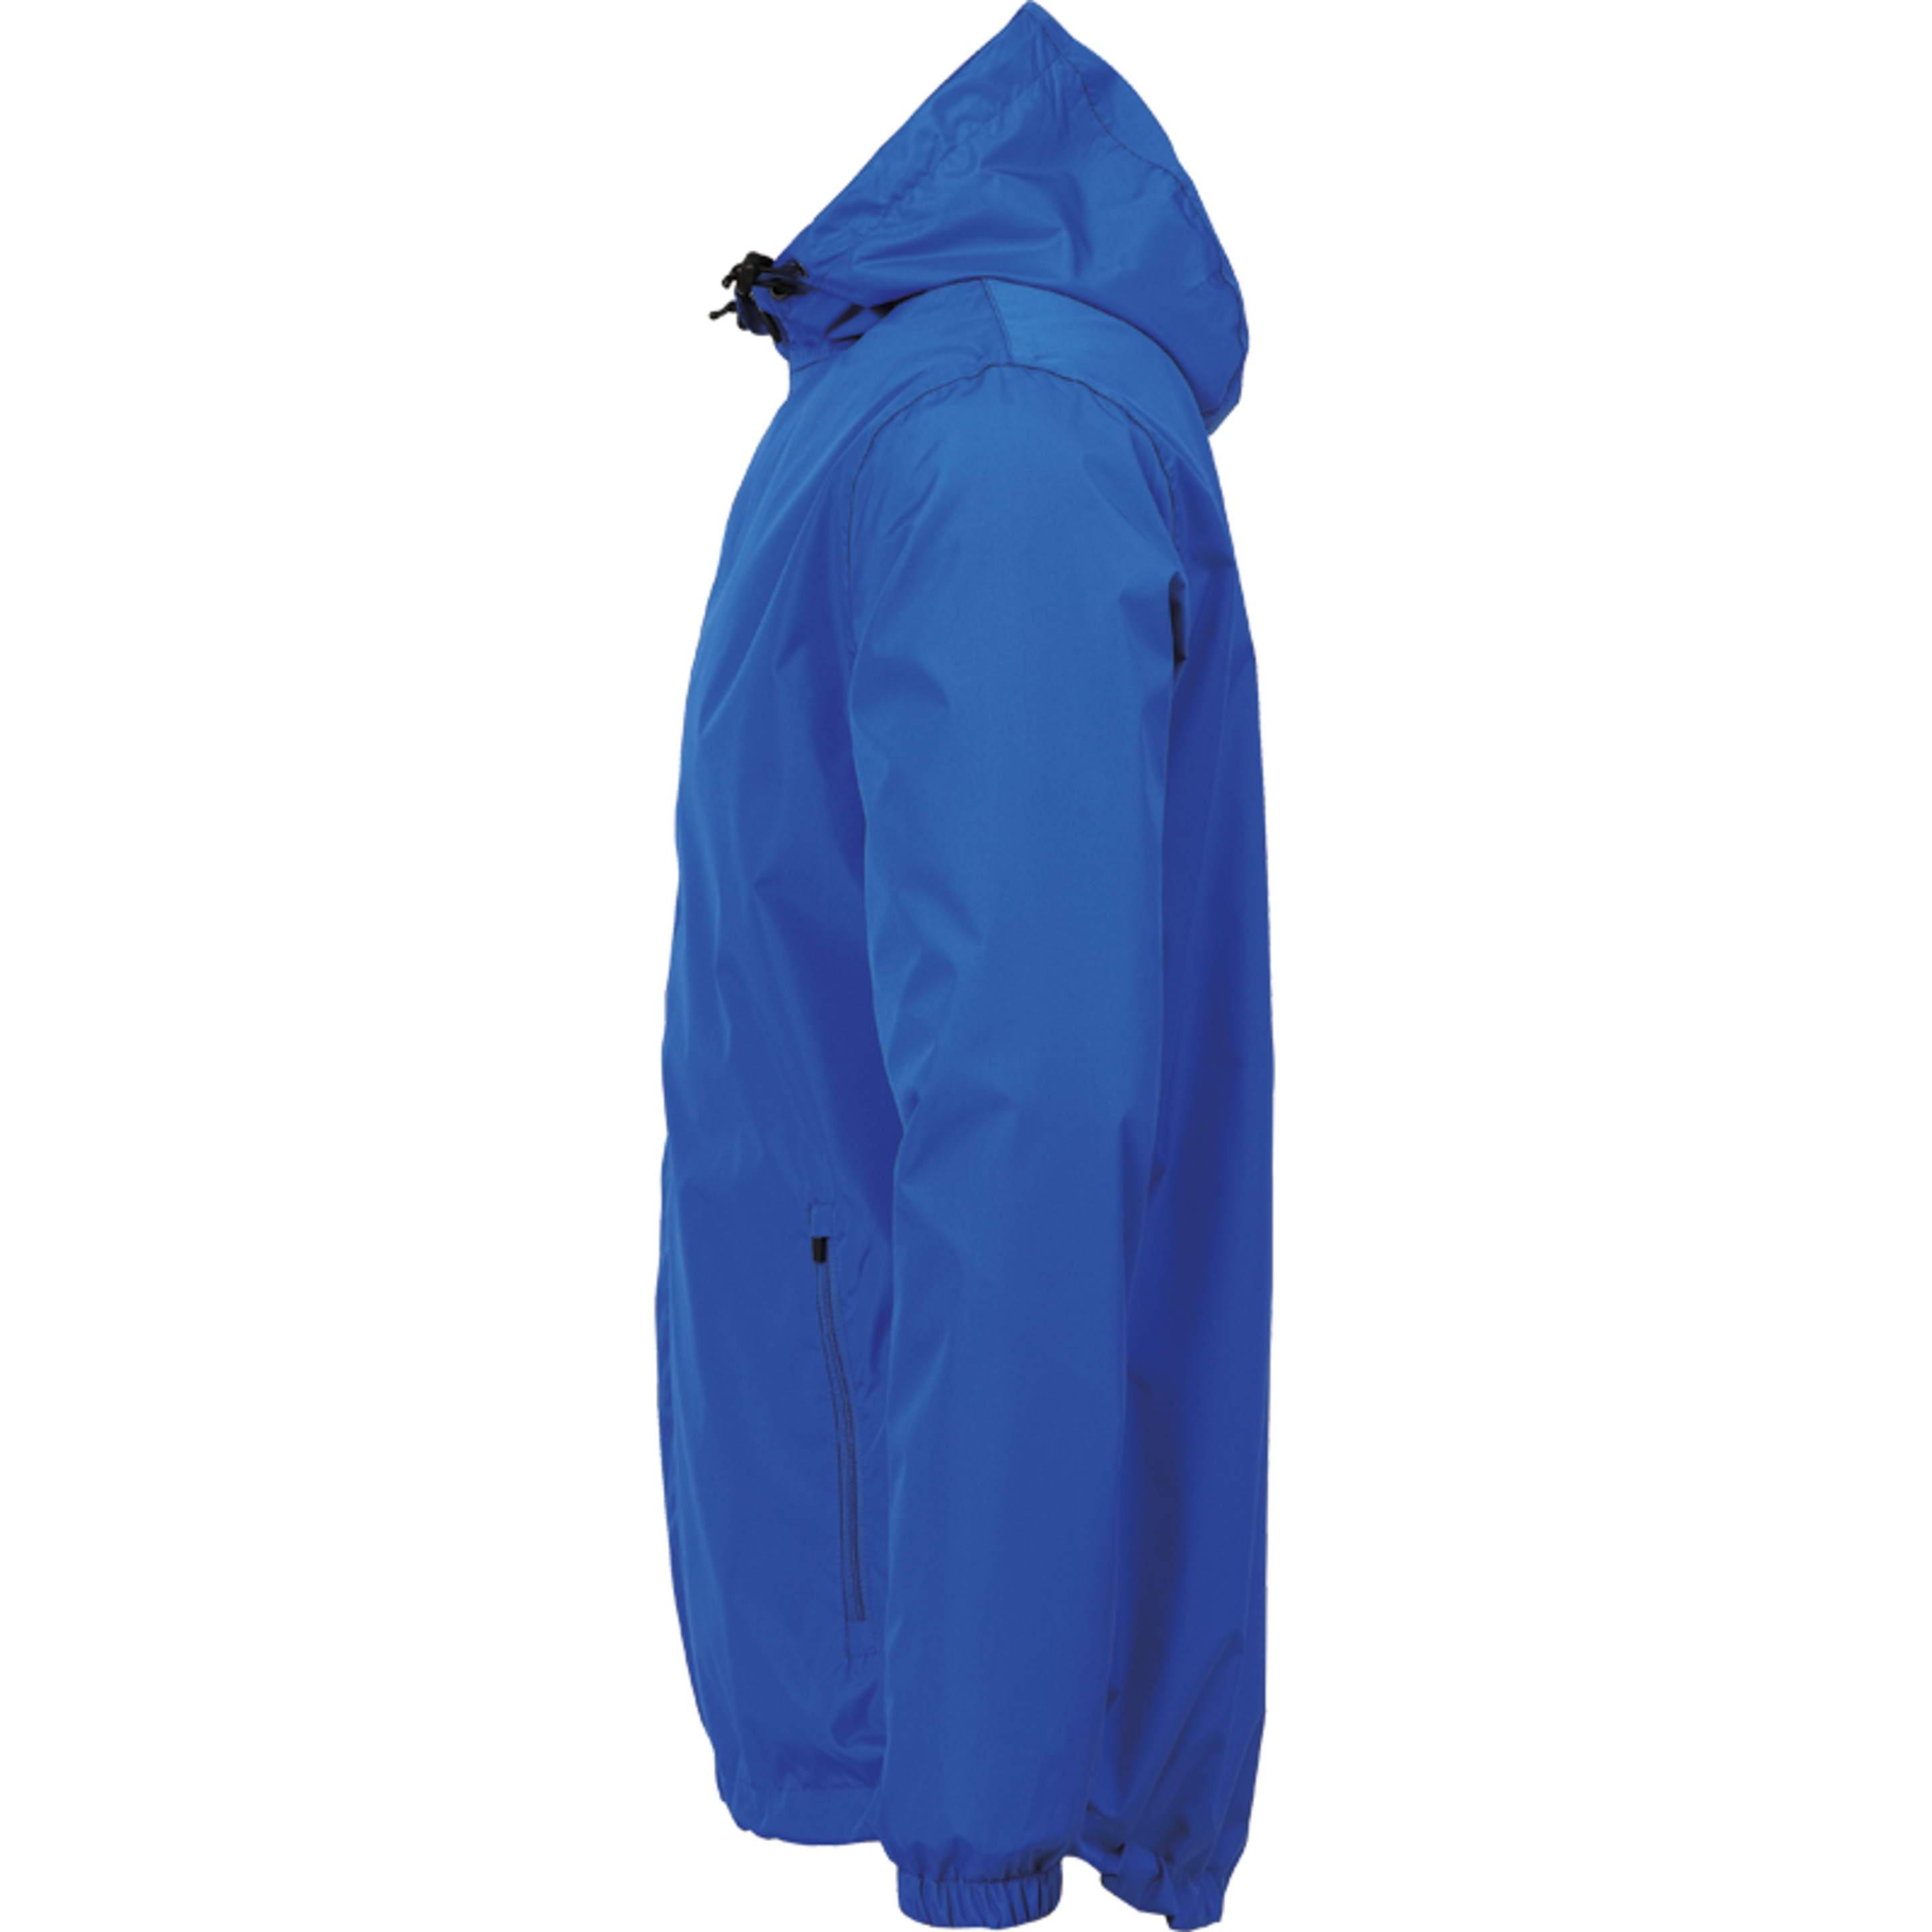 Essential Rain Jacket Azur/blanco Uhlsport - blanco_azul - Essential Rain Jacket Azur/blanco Uhlsport  MKP